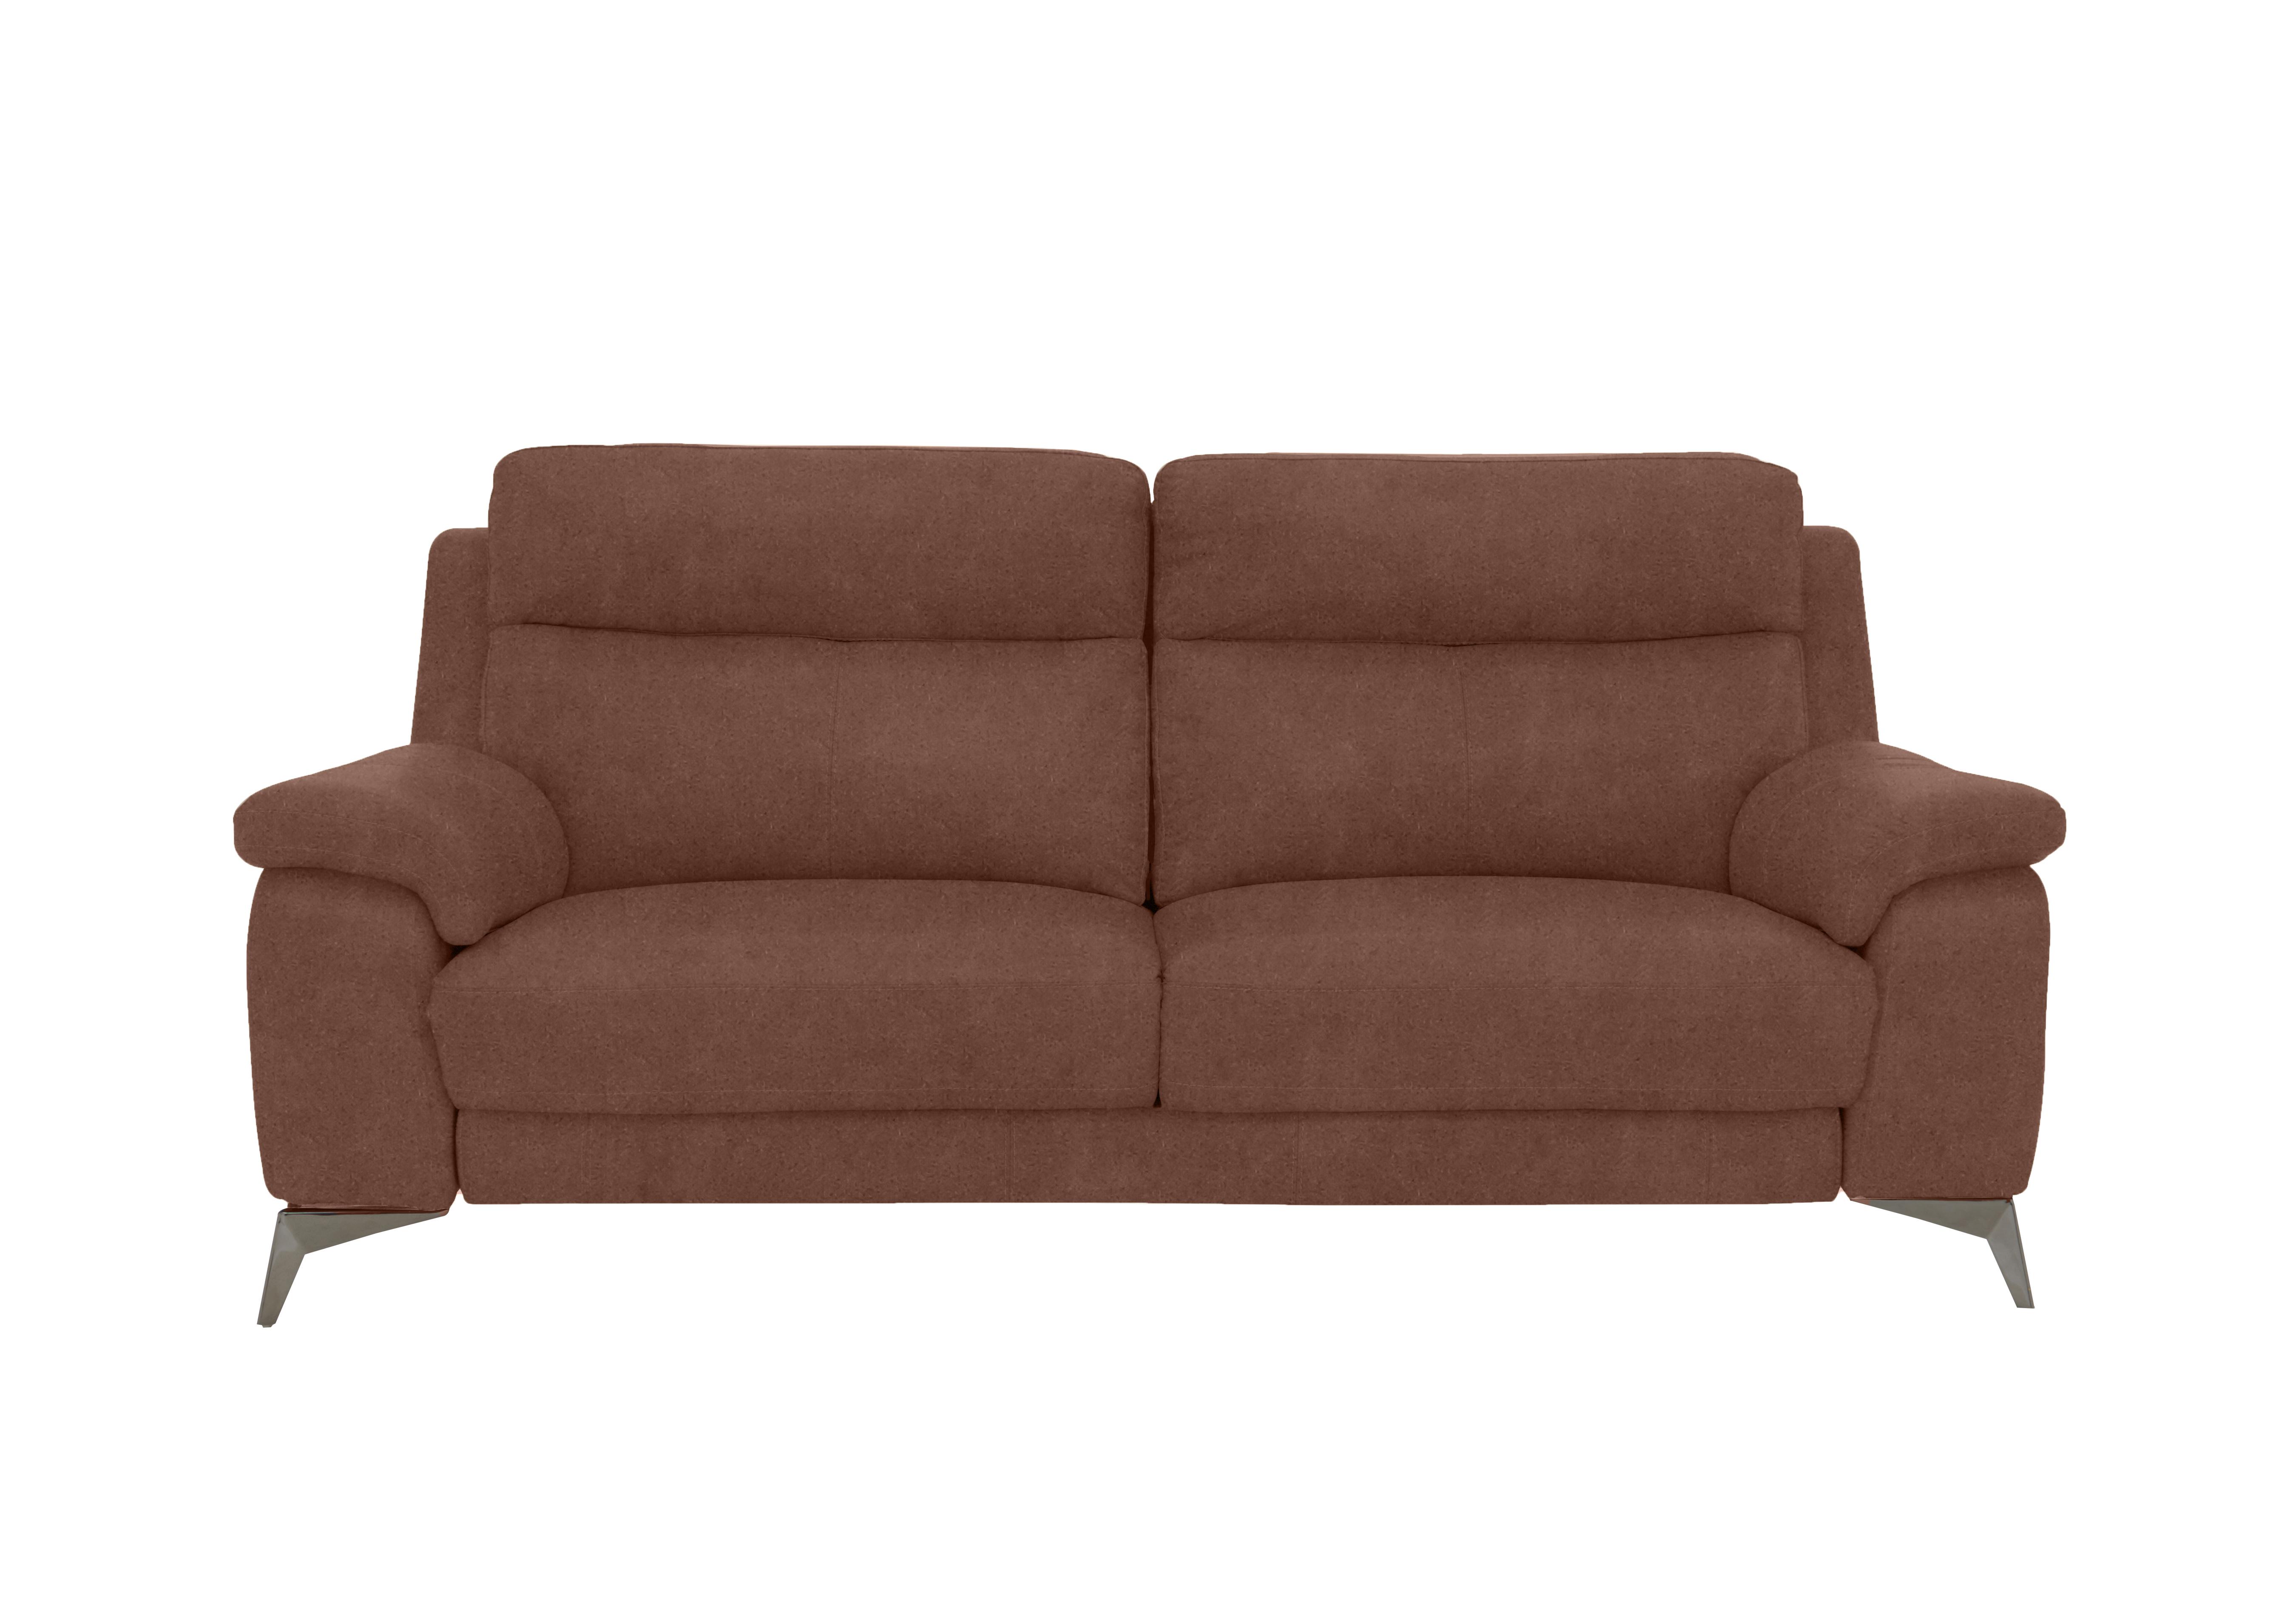 Missouri 3 Seater Fabric Sofa in Bfa-Blj-R05 Hazelnut on Furniture Village